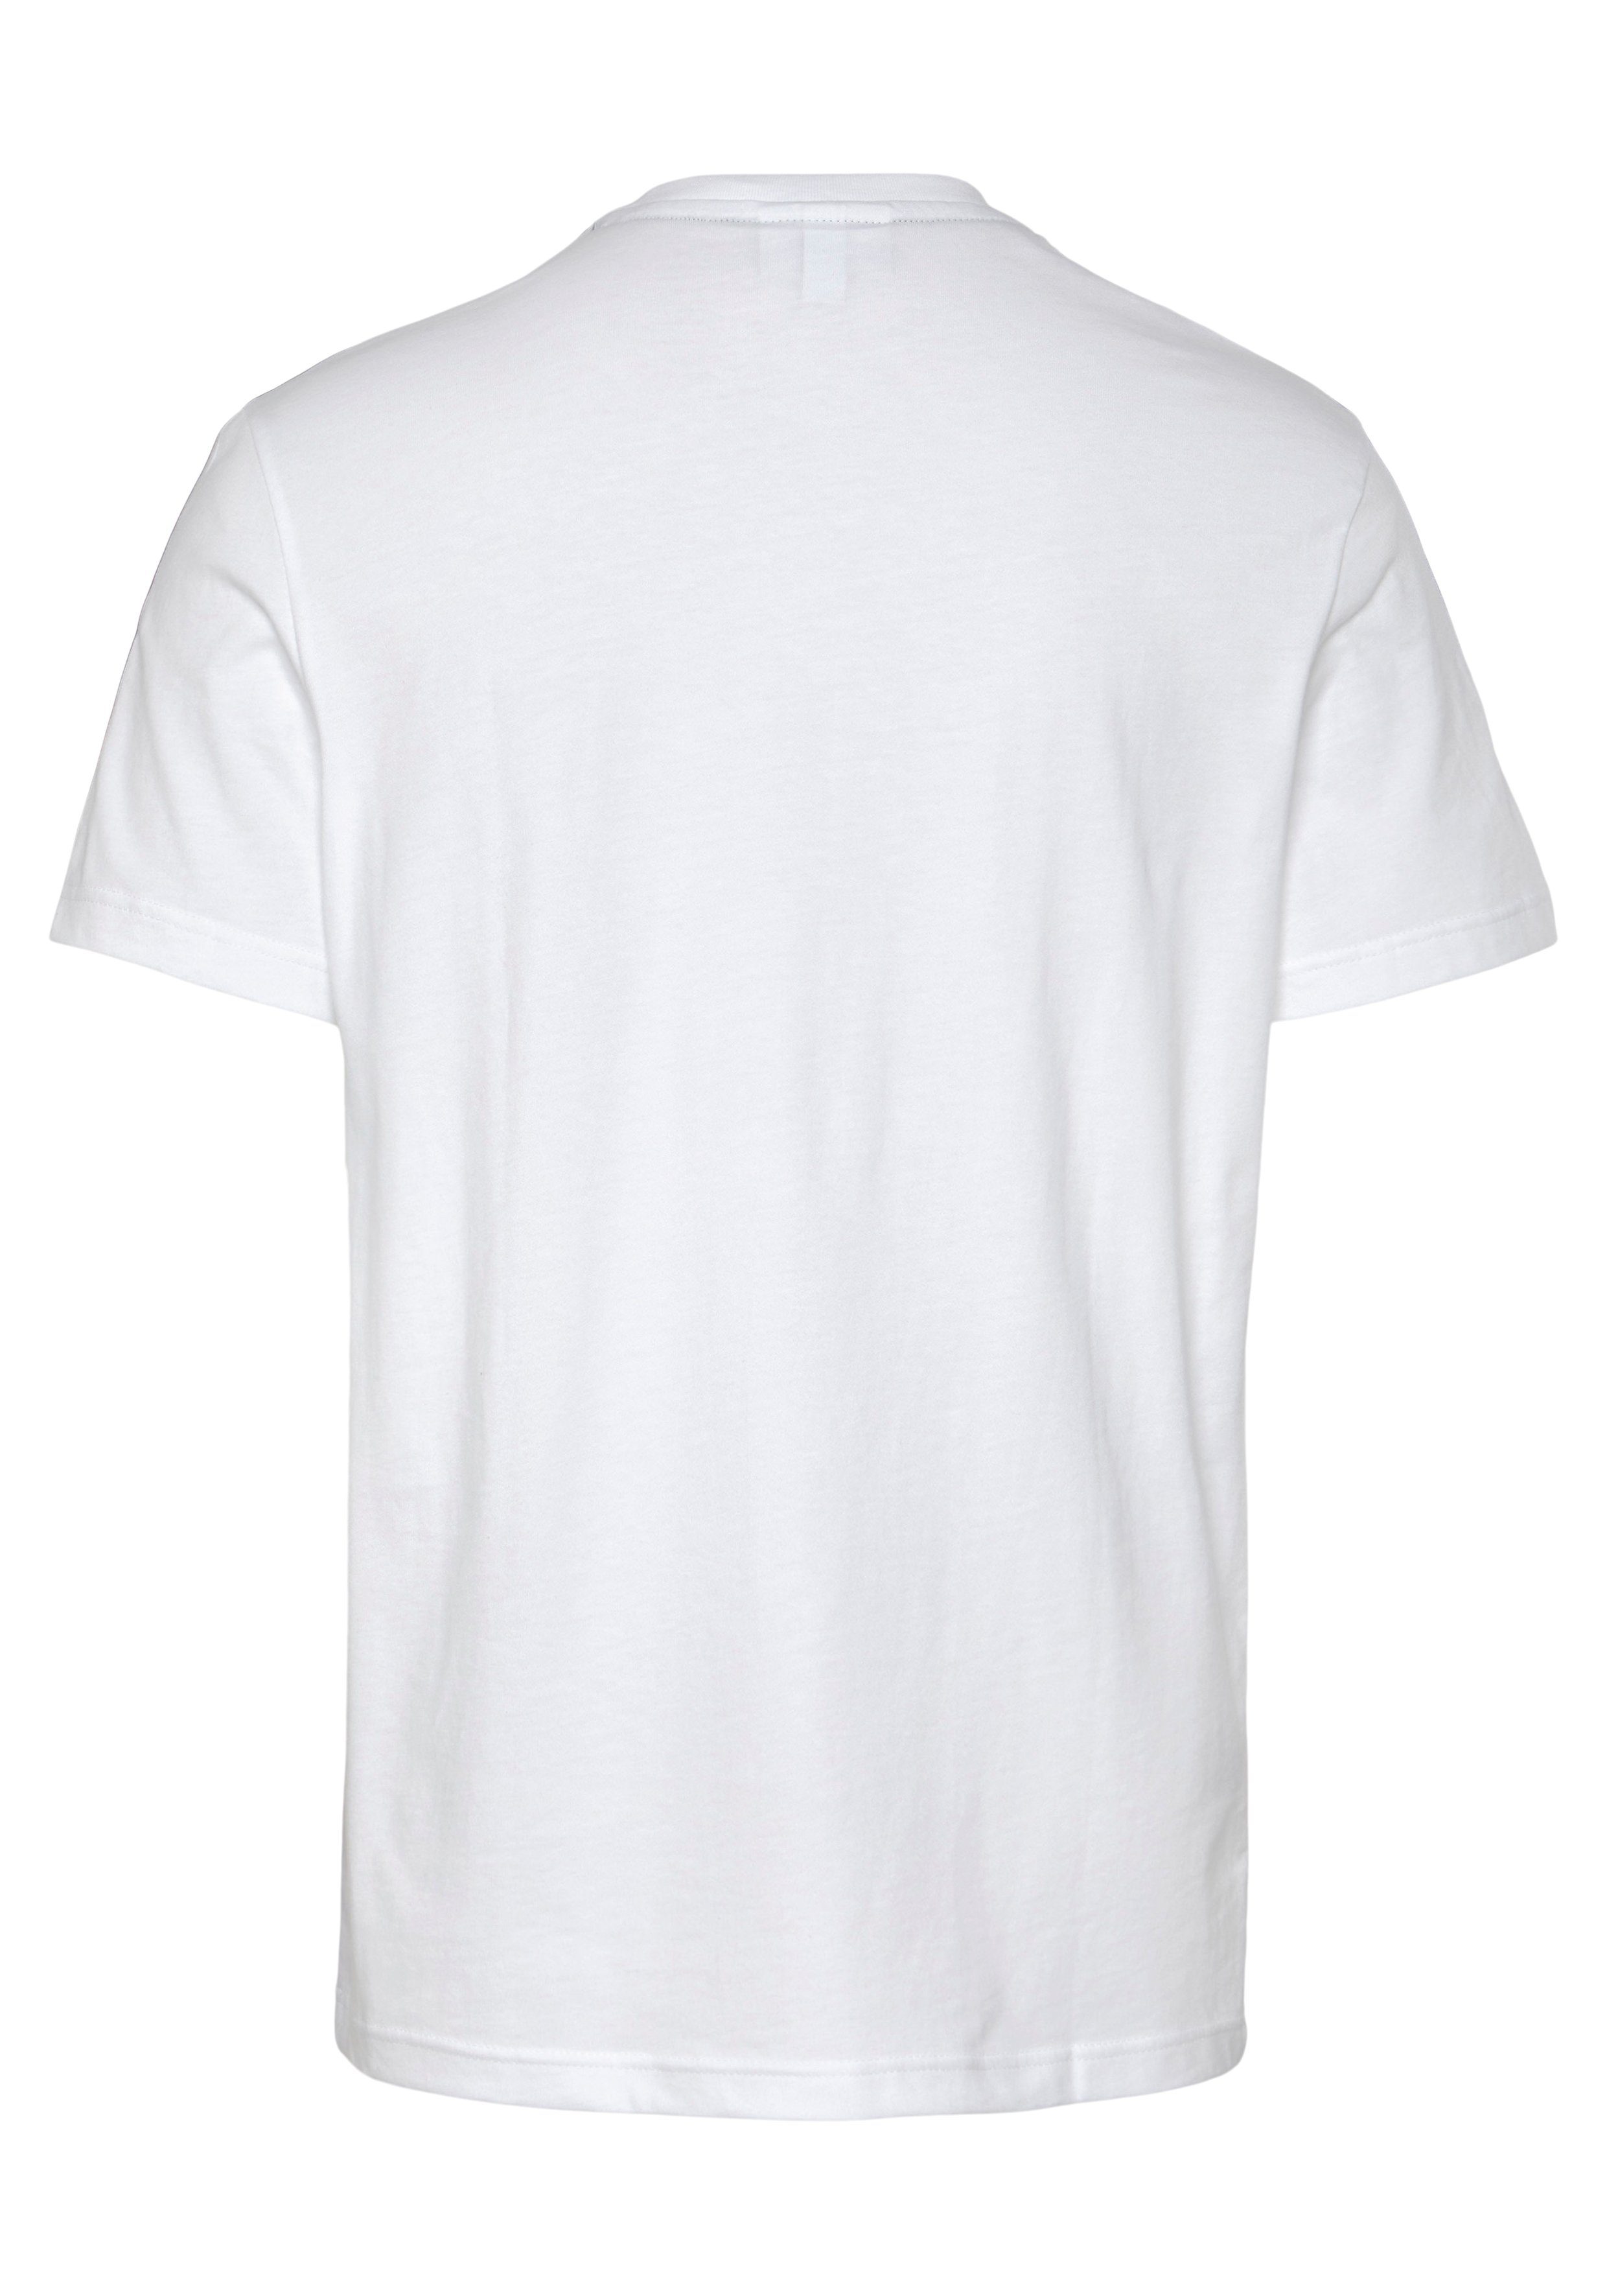 beschriftetem mit Kontrastband T-Shirt den white an Schultern Lacoste